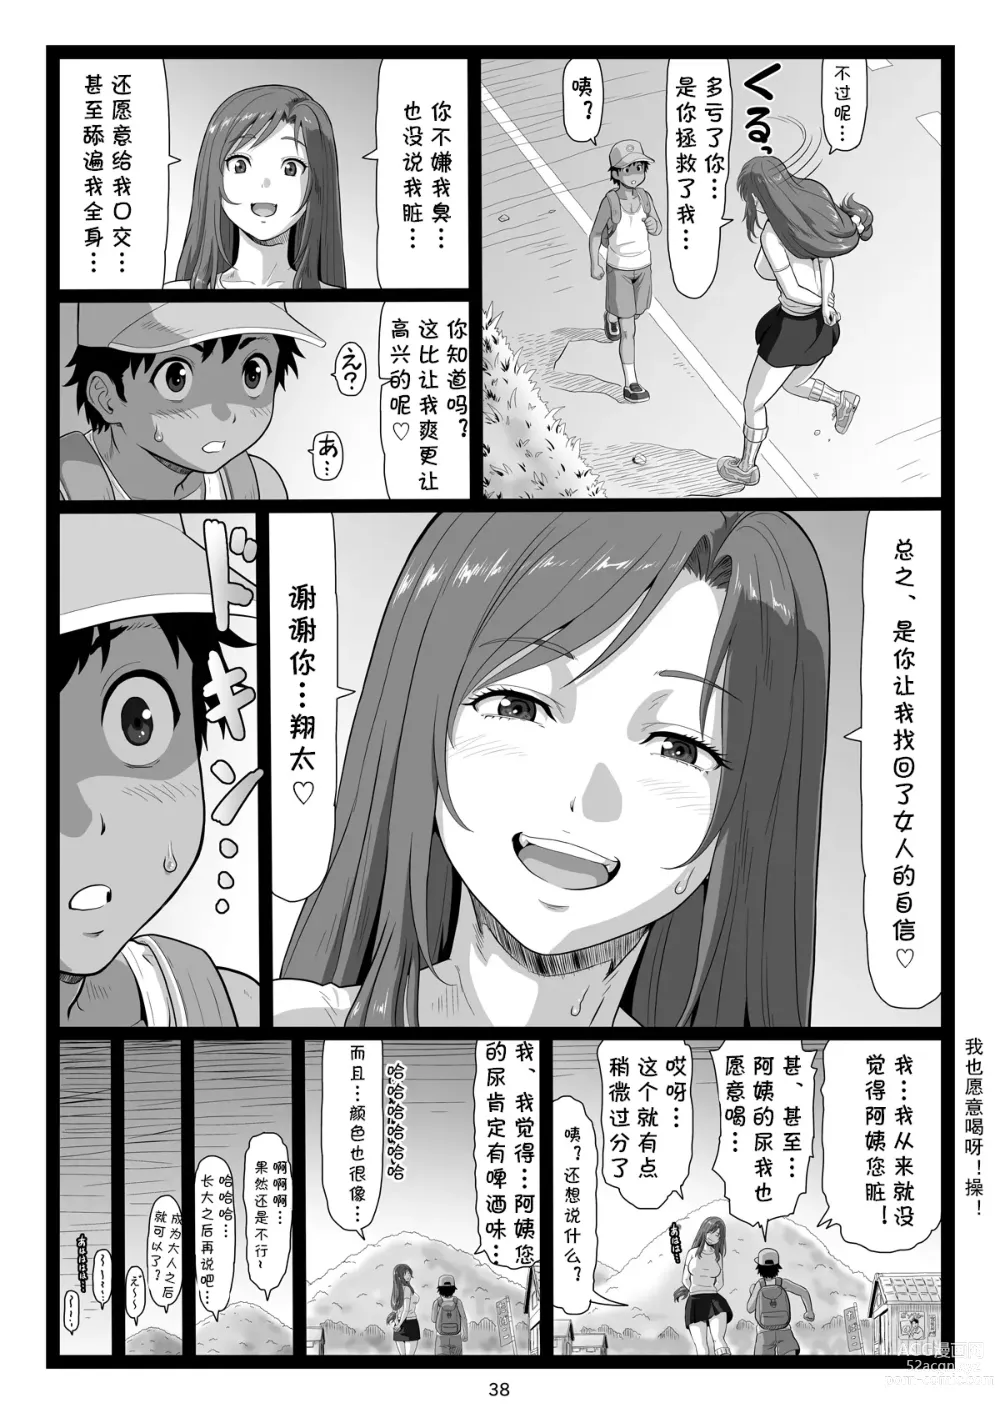 Page 38 of doujinshi Natsuyasumi no Omoide Gekan